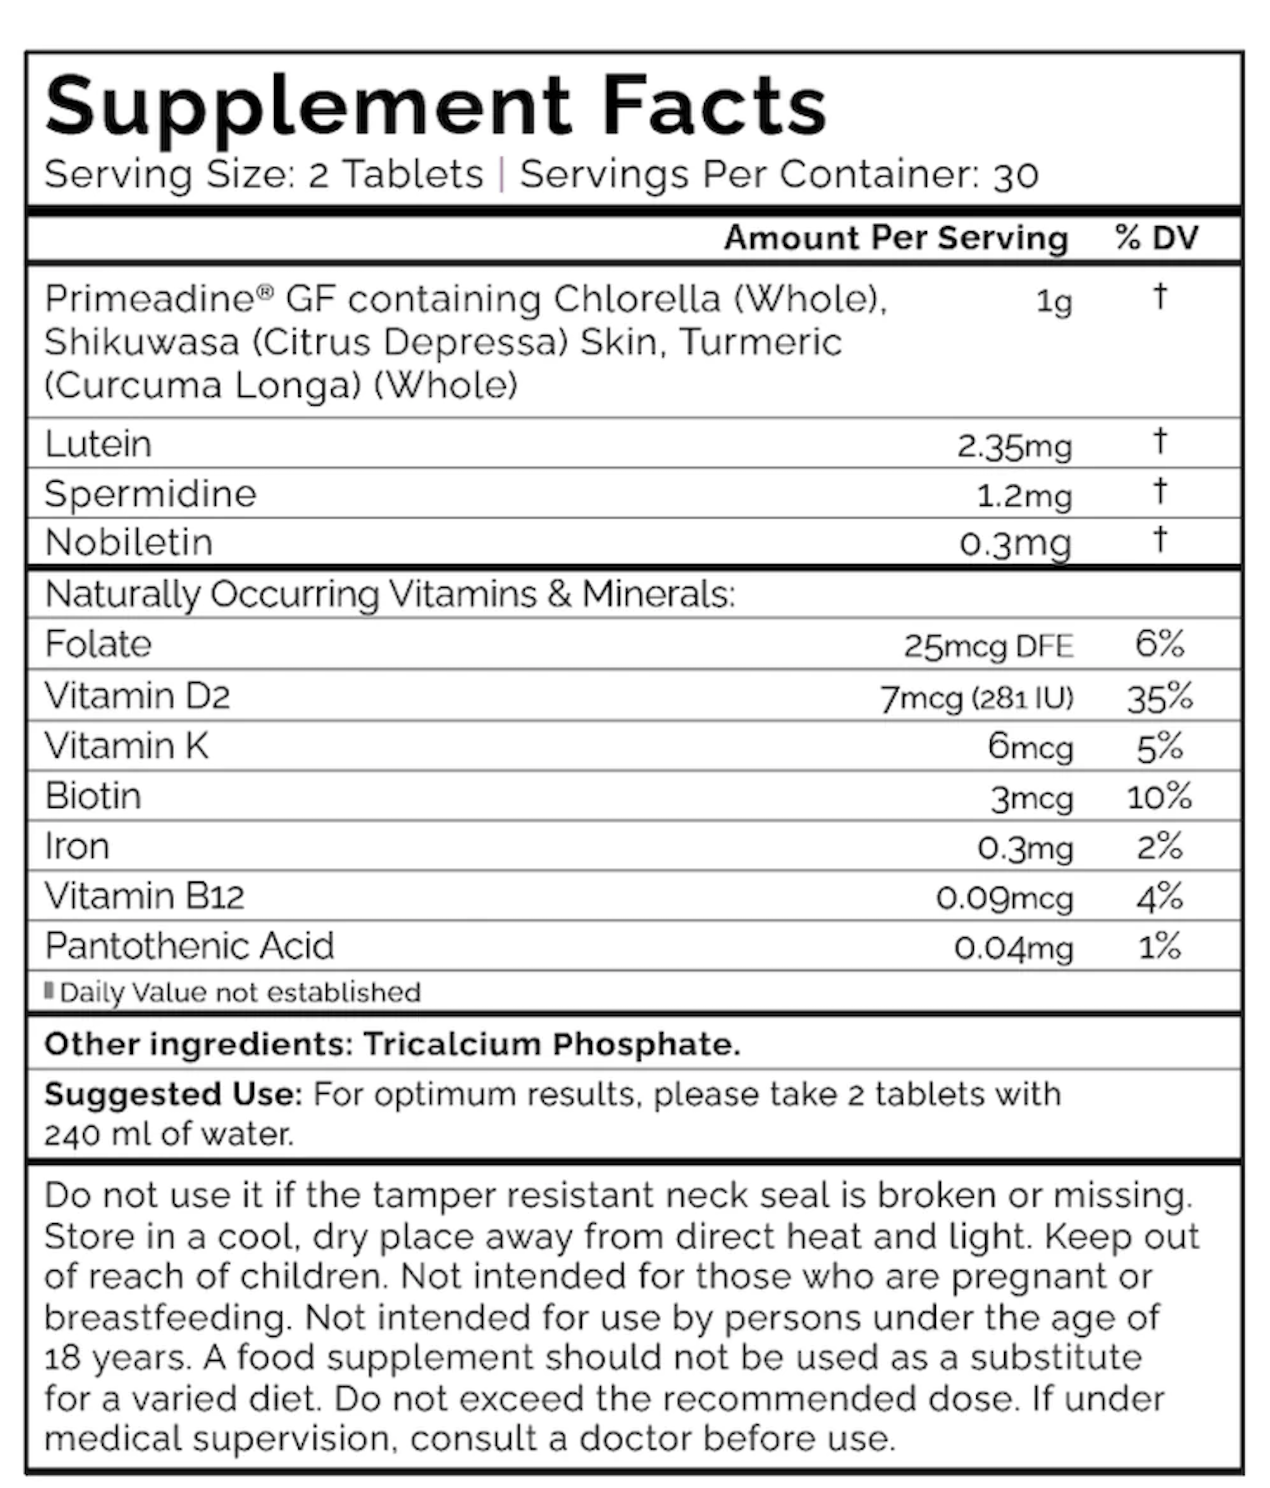 Primeadine® Original & GF Spermidine Supplement Mixed - 3-Bottles Bundle / 90 Day Supply